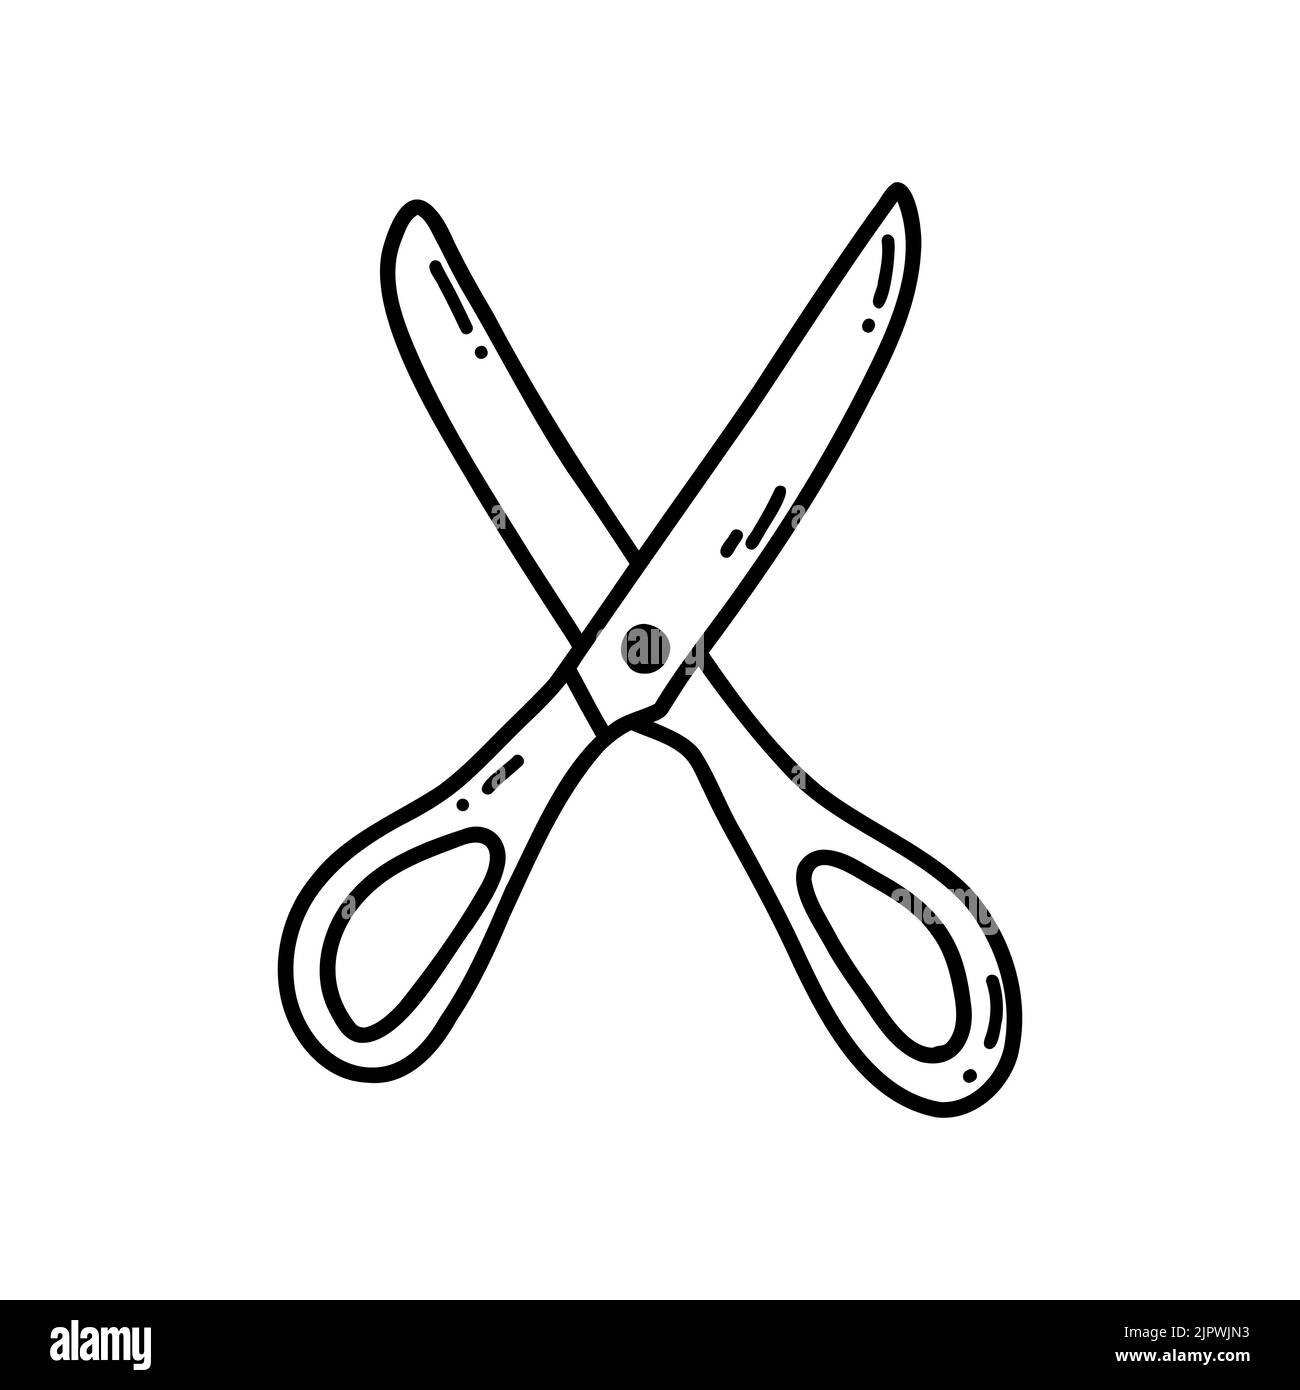 School Supplies Clip Art, Scissors Open & Closed, Hand-drawn Design Elements